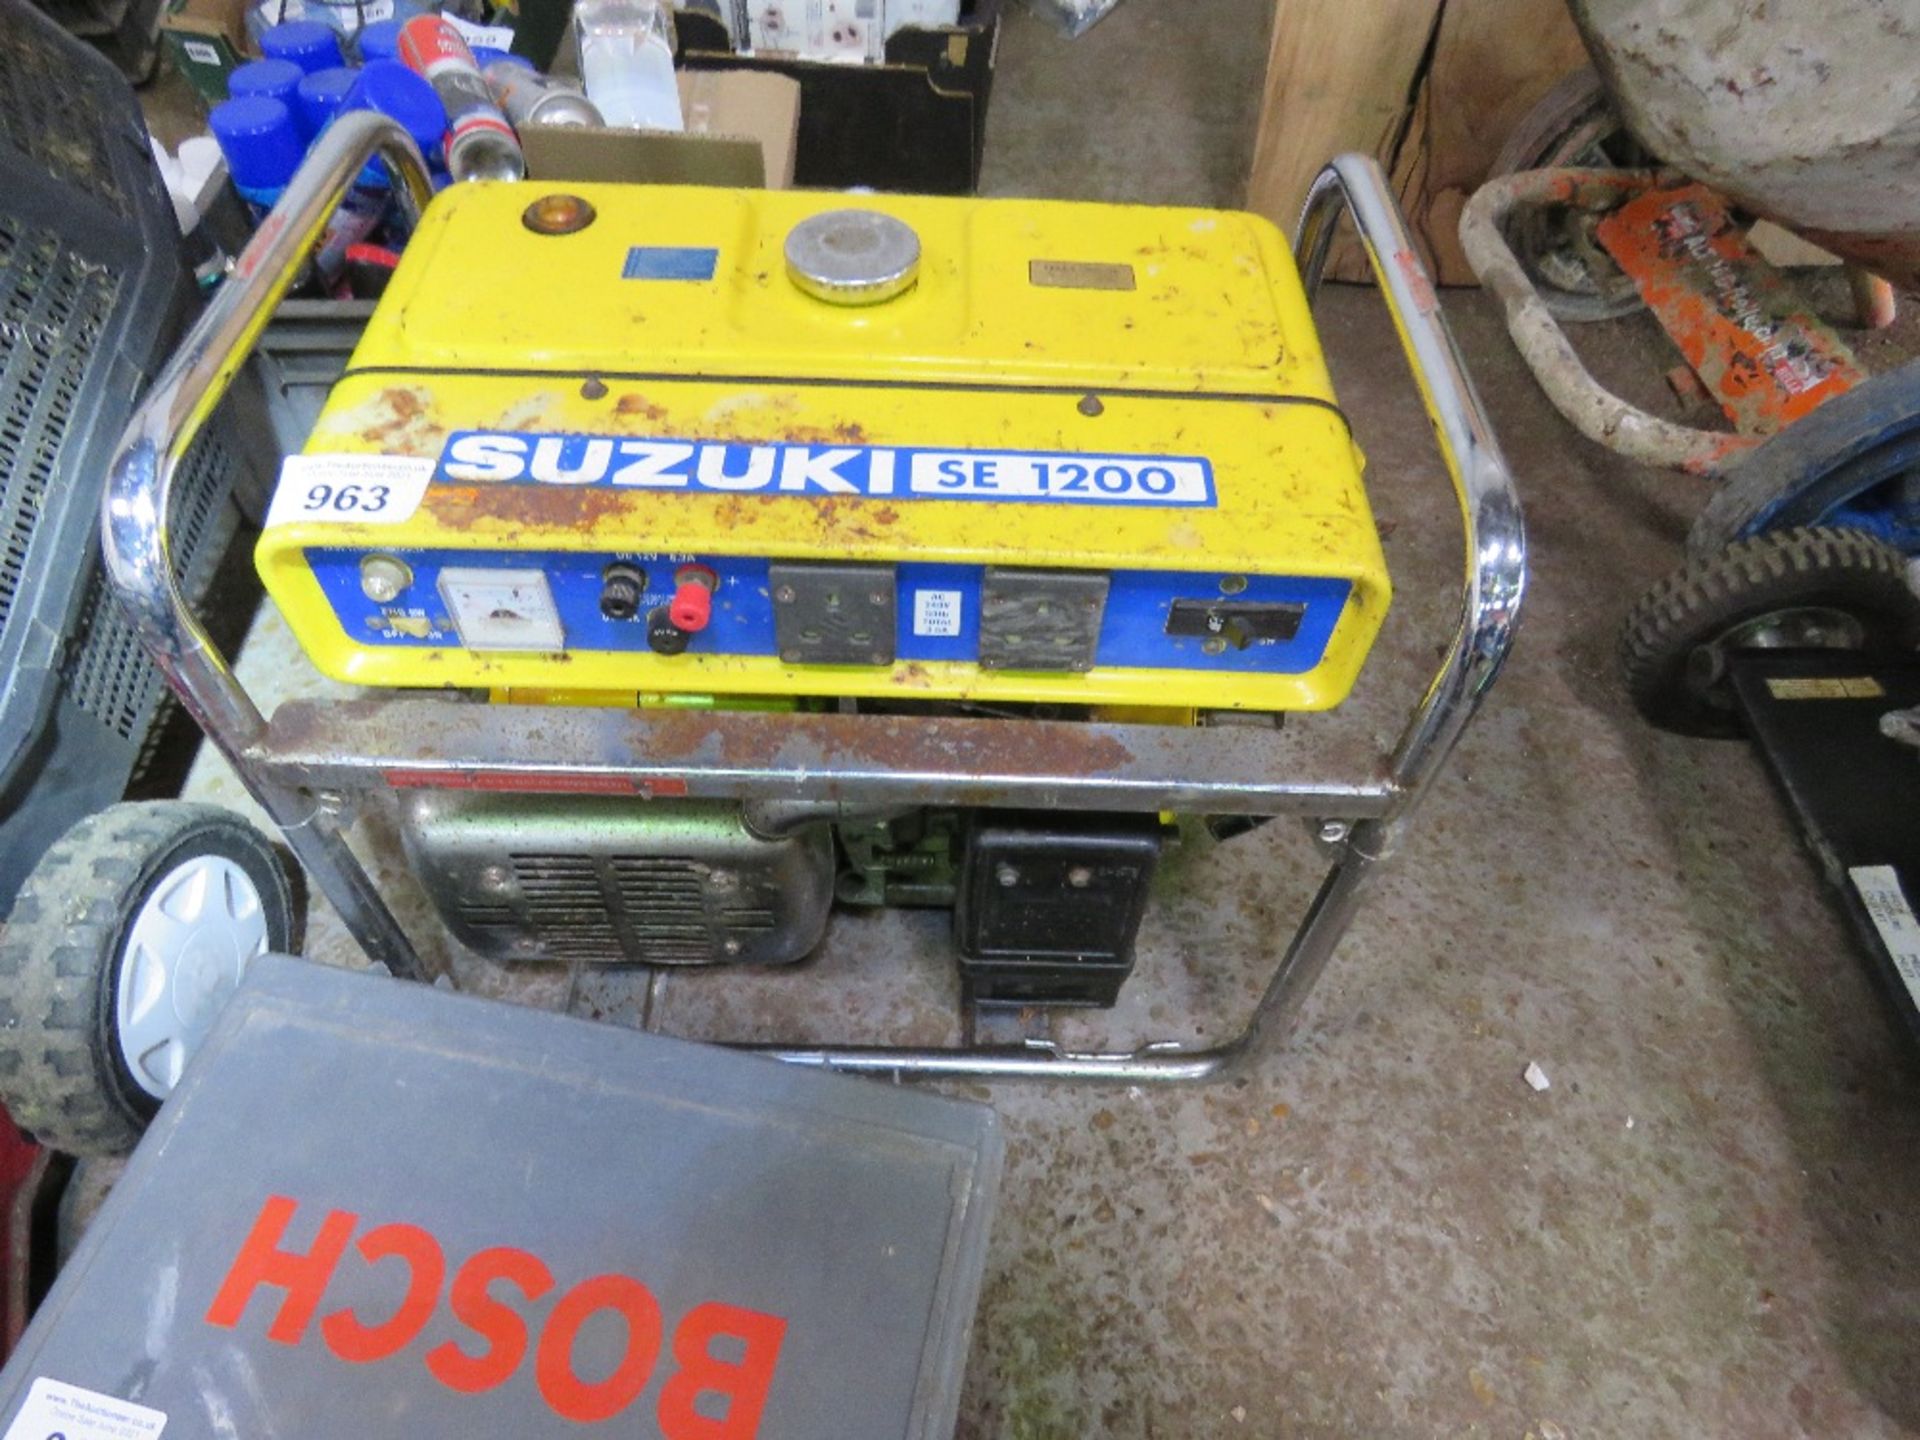 SUZUKI PETROL ENGINED GENERATOR. NO VAT ON HAMMER PRICE.